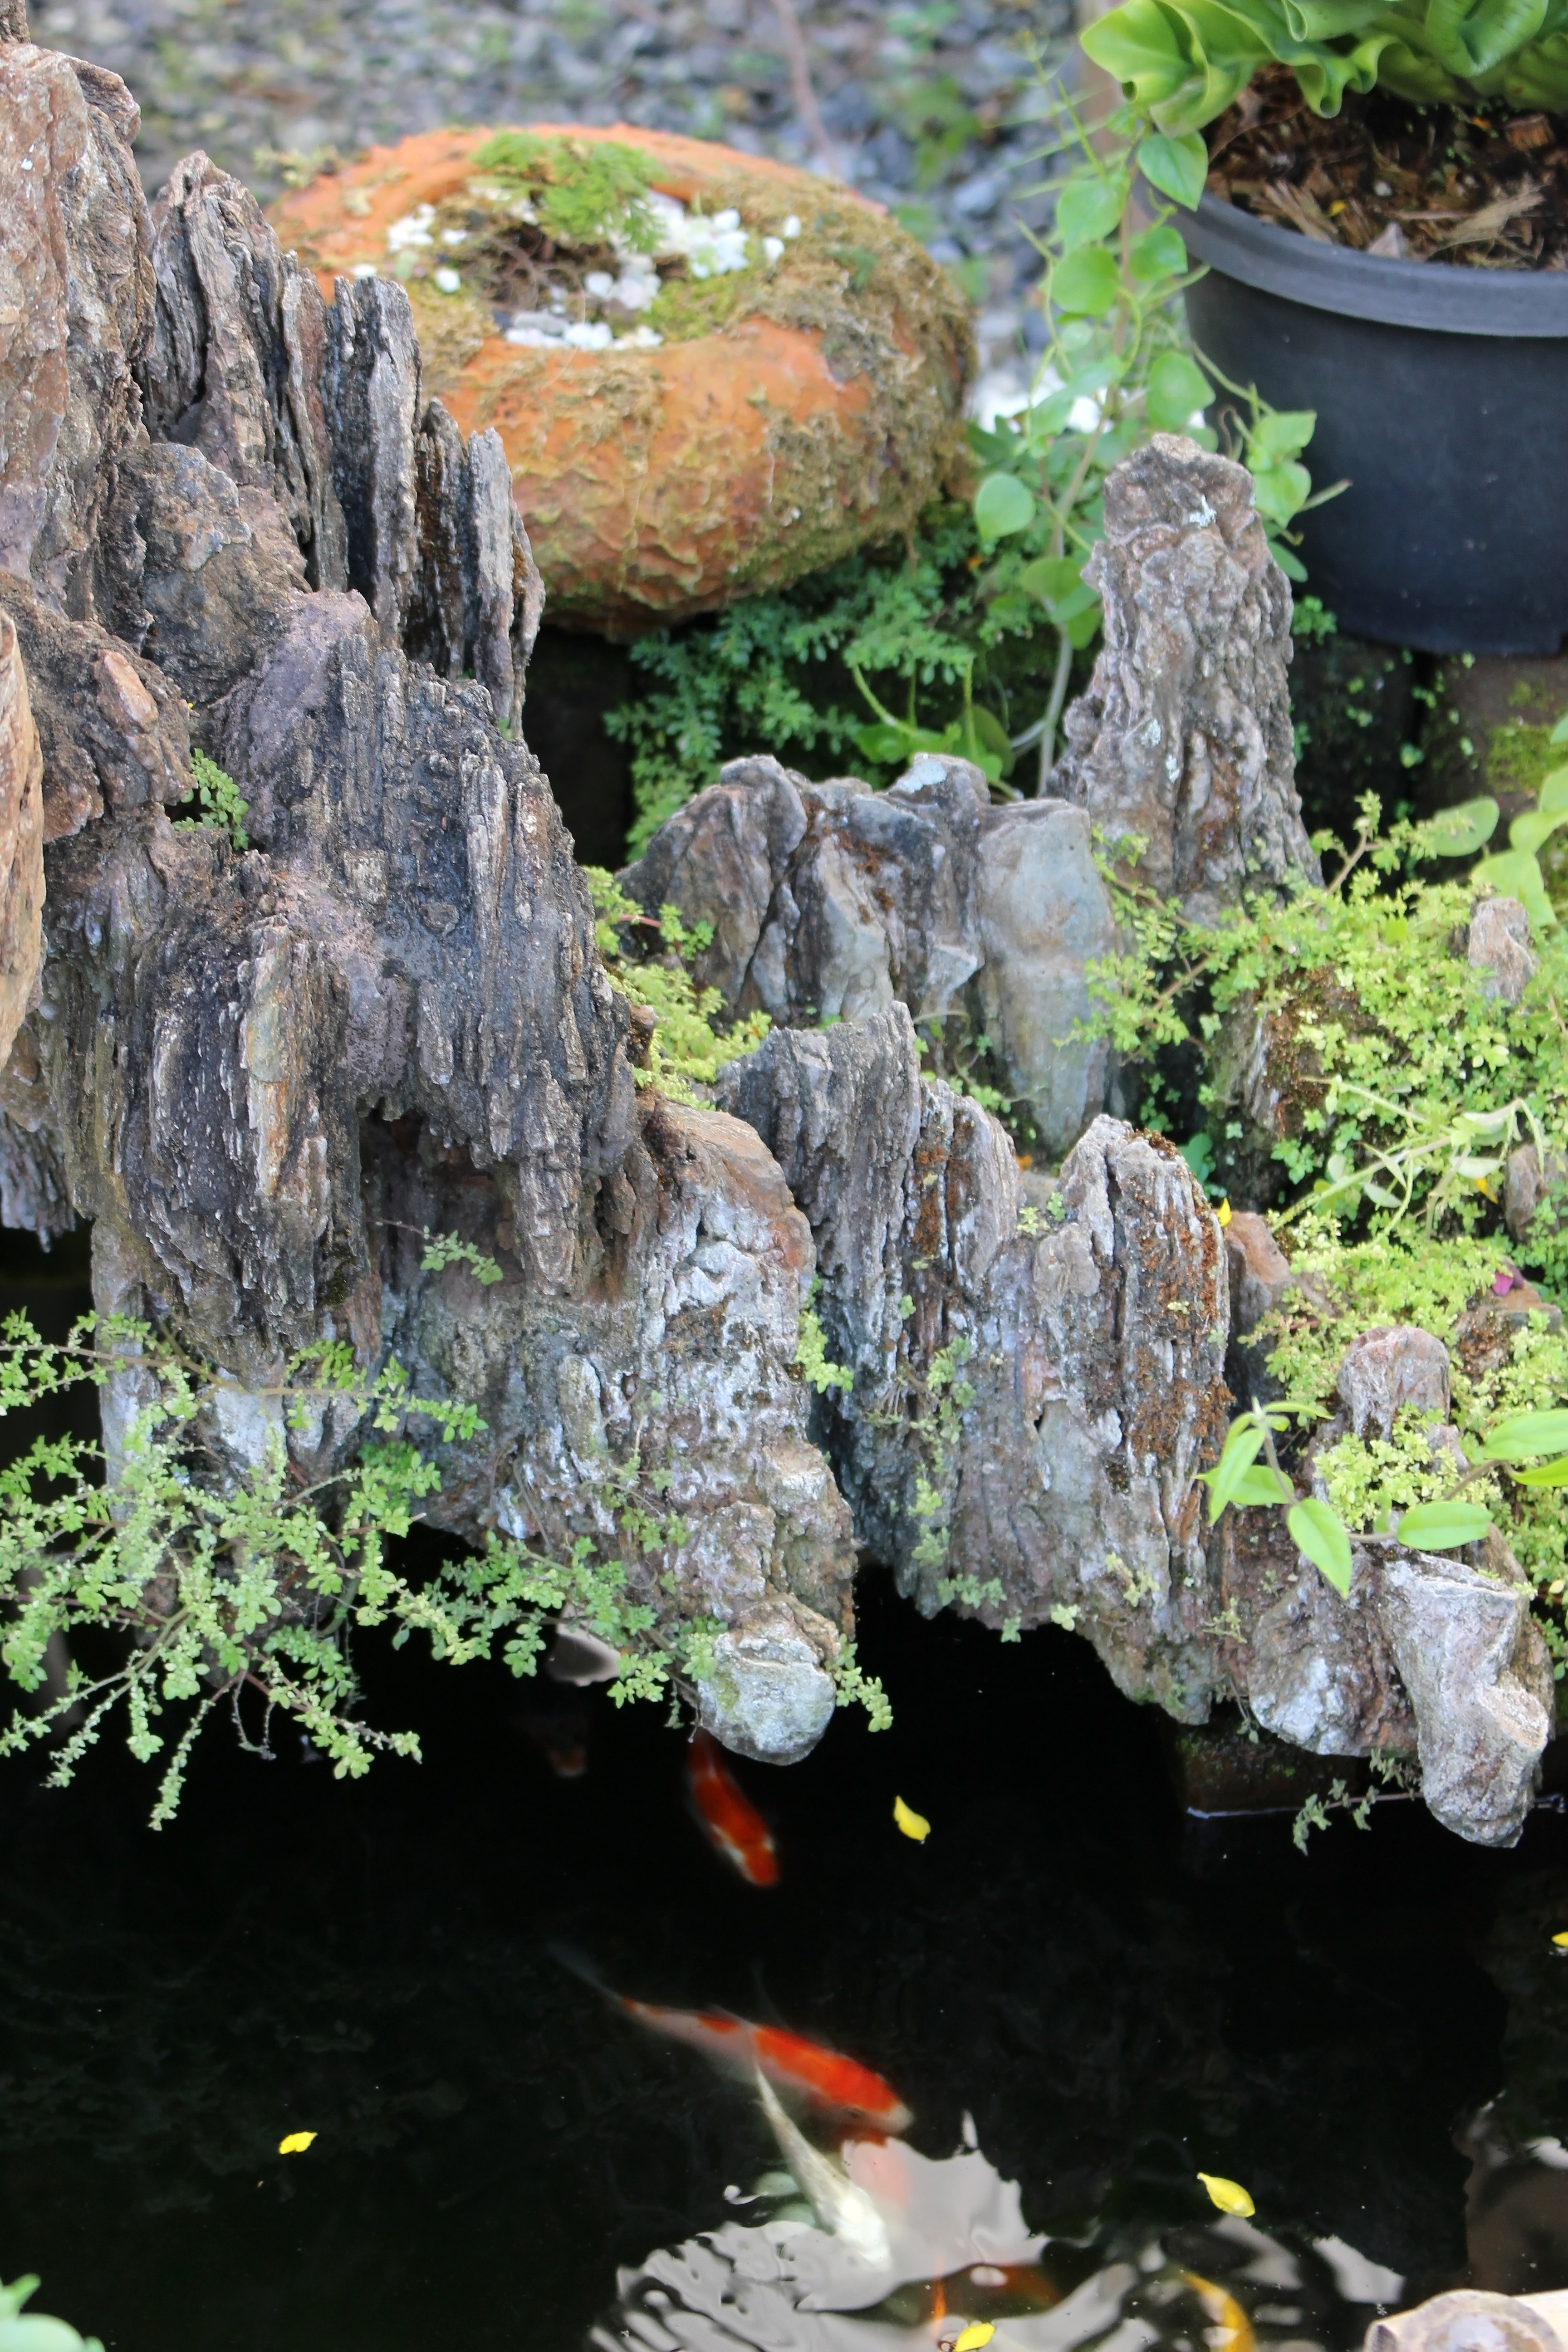 Japanese style garden pond with koi carp fish photo